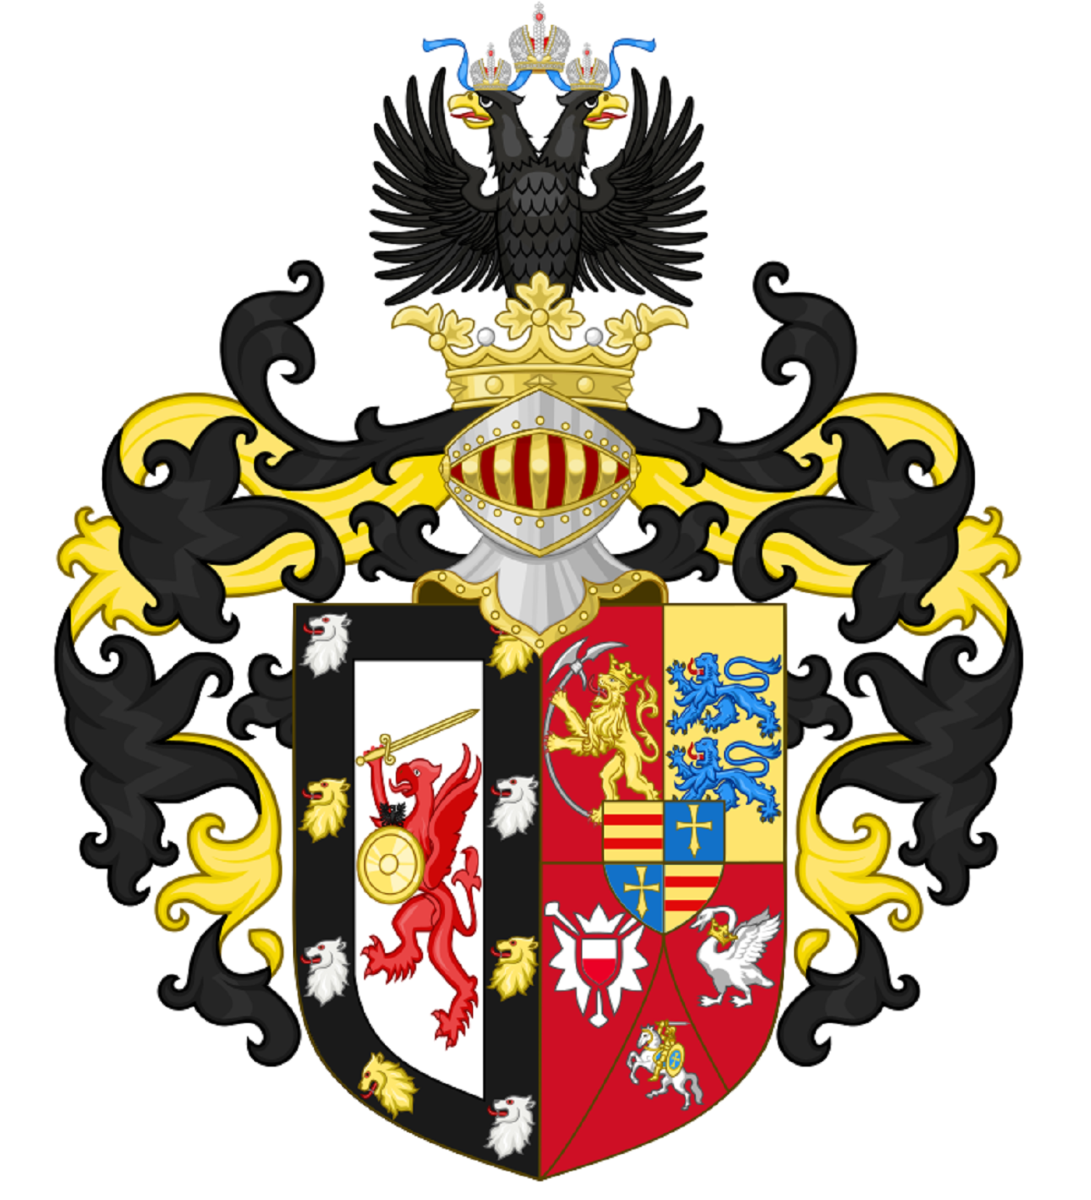 The coat of arms of the duke of Holstein-Gottorp, head of the exiled Romanov family. Prince Paul Dmitrievich Romanovsky-Ilyinsky was de jure head of the dynasty between 1992-2004.